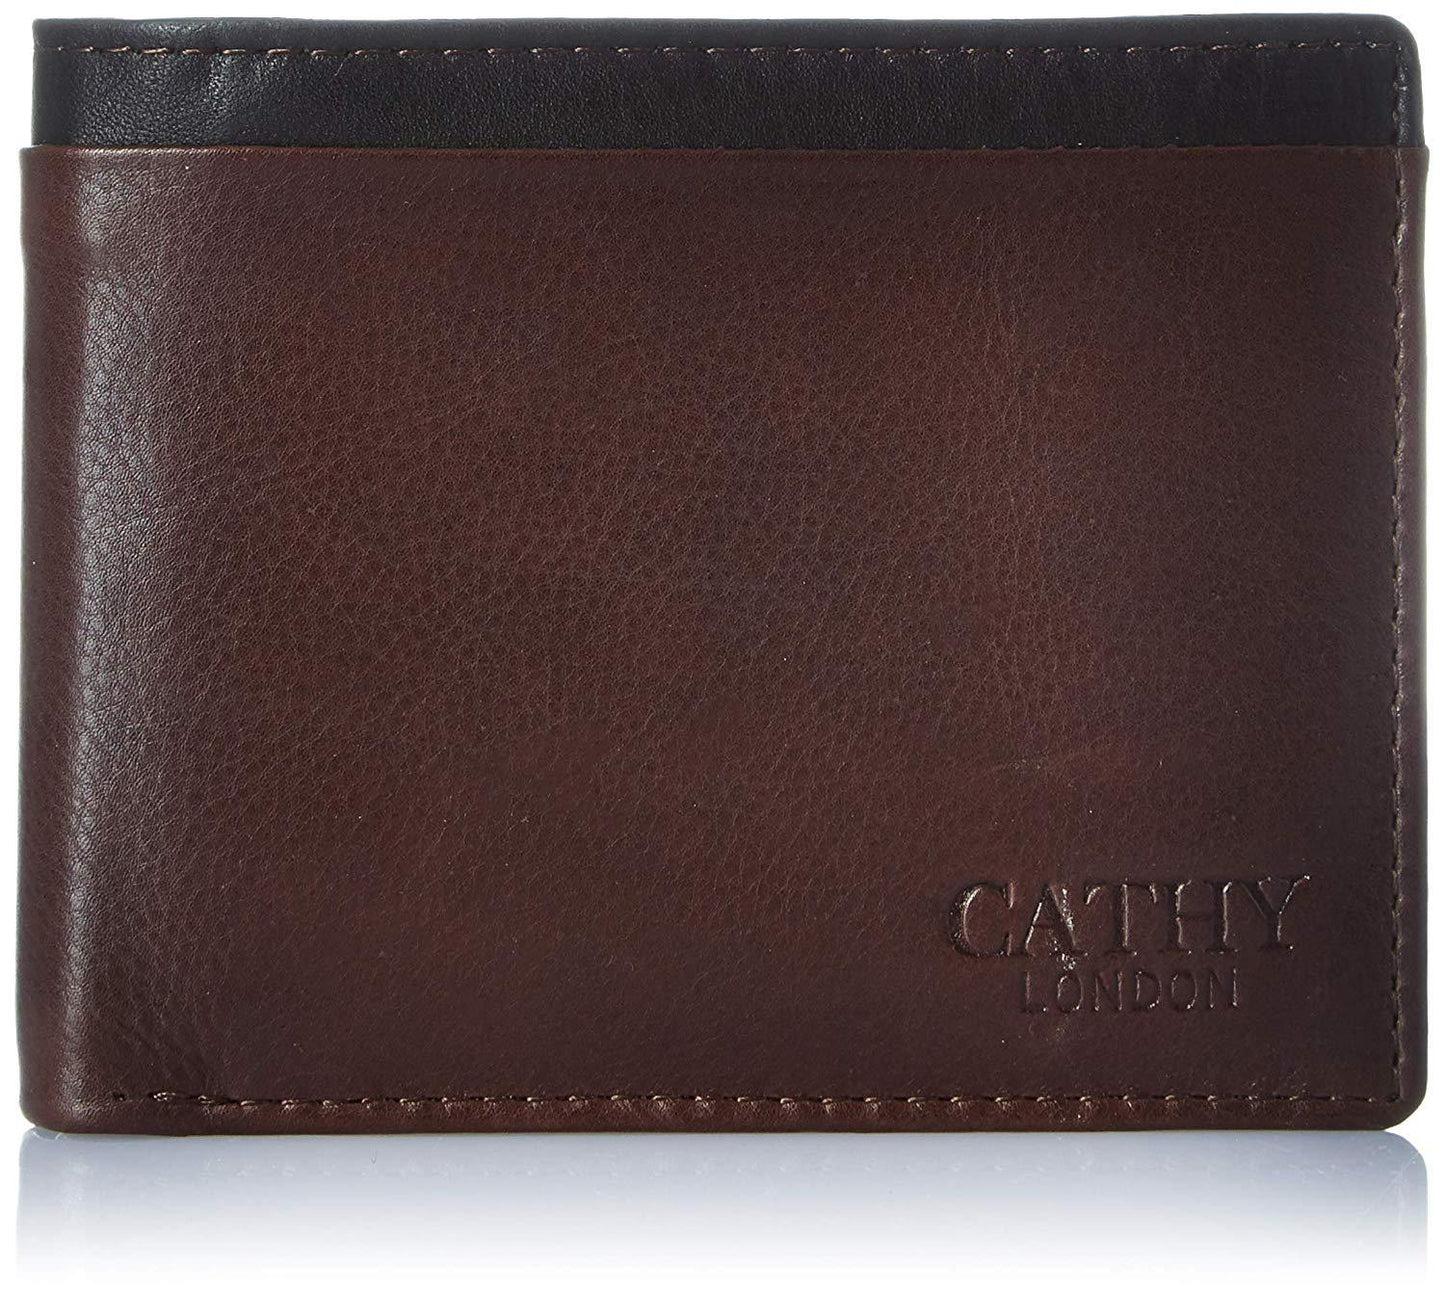 Brown Colour Bi-Fold Italian Leather Slim Wallet ( 7 Card Slot + 2 Hidden Compartment + 1 ID Slot + Coin Pocket + Cash Compartment )